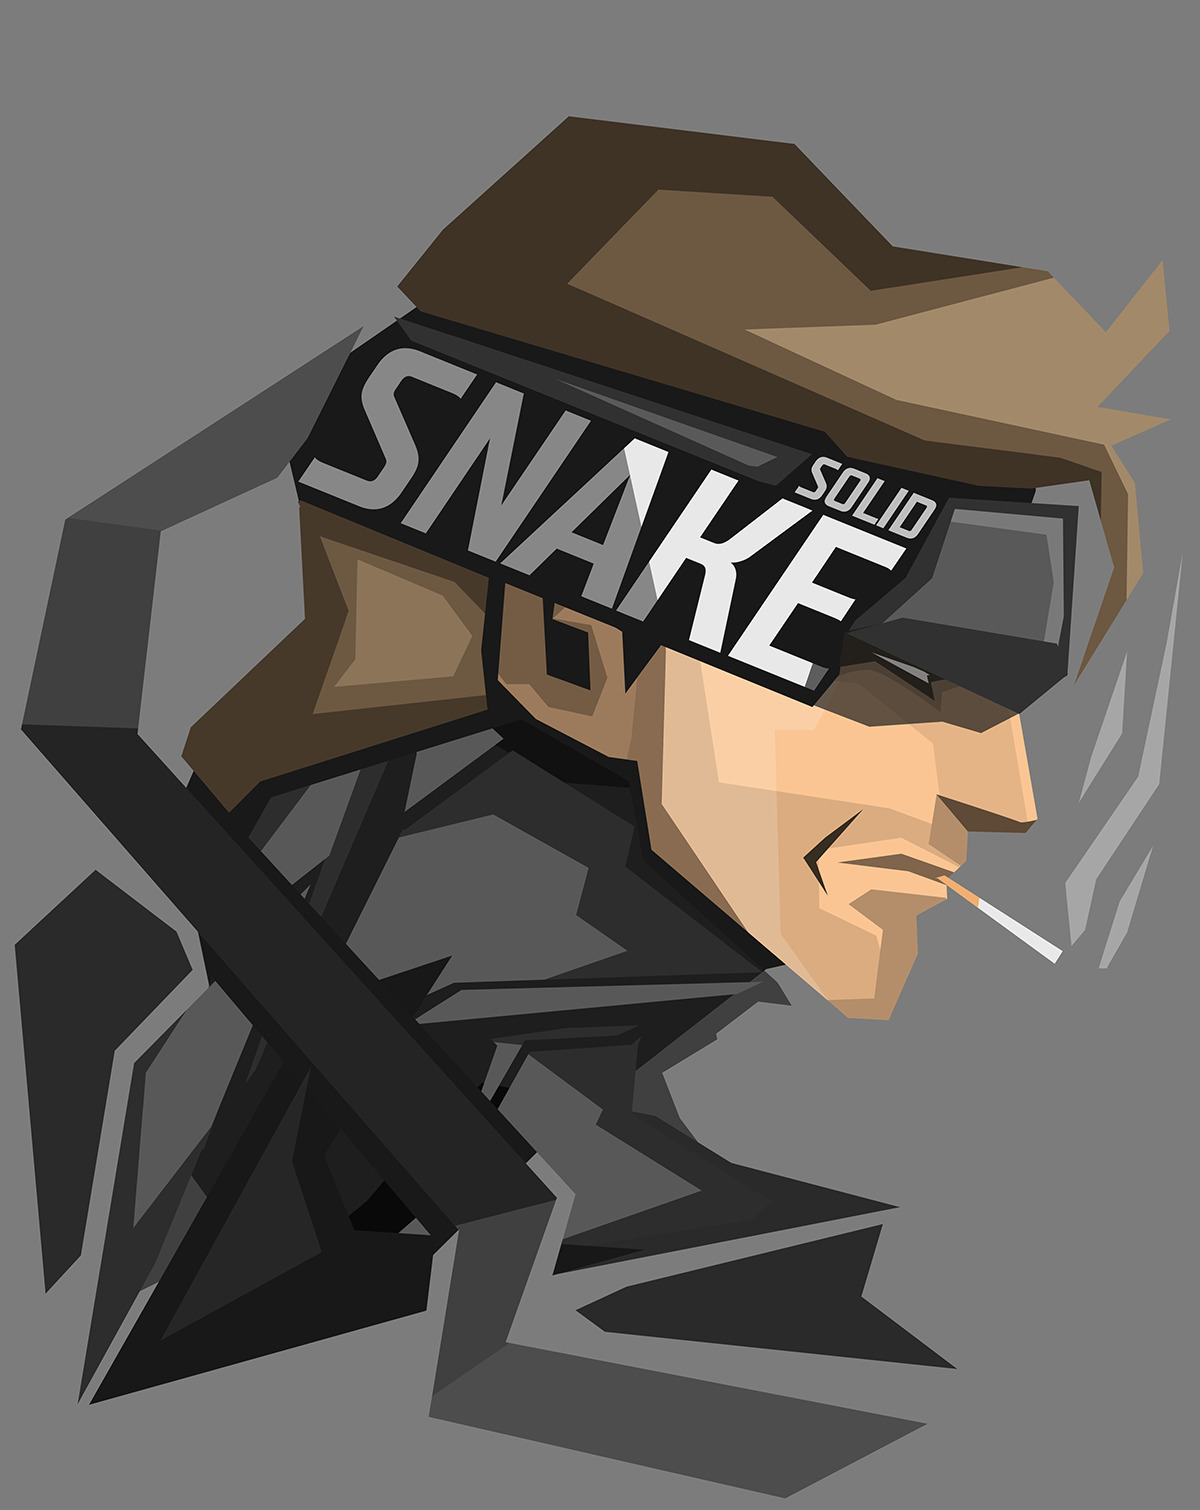 solid snake konami video games gray gray background vector Wallpaper